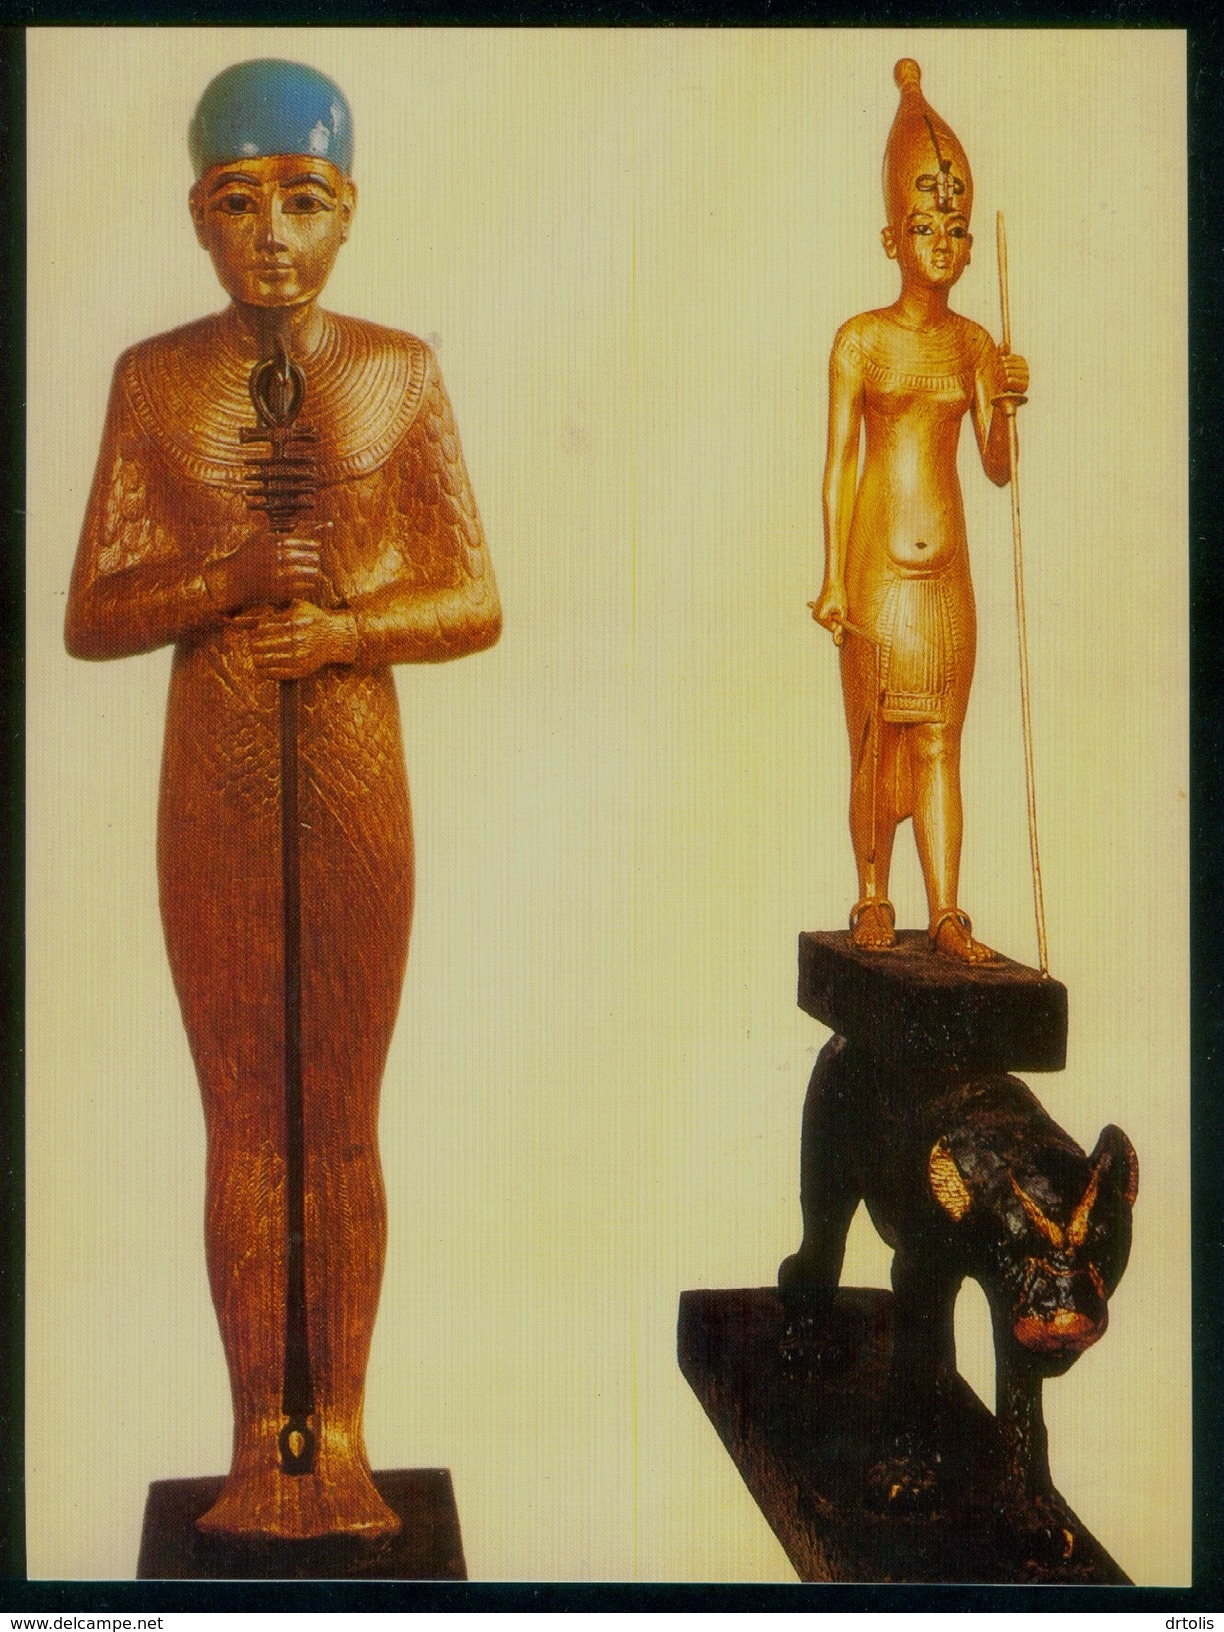 EGYPT / EGYPTOLOGY / EGYPTIAN MUSEUM / TUTANKHAMUN'S TREASURES / PTAH / THE KING OF UPPER EGYPT - Musei